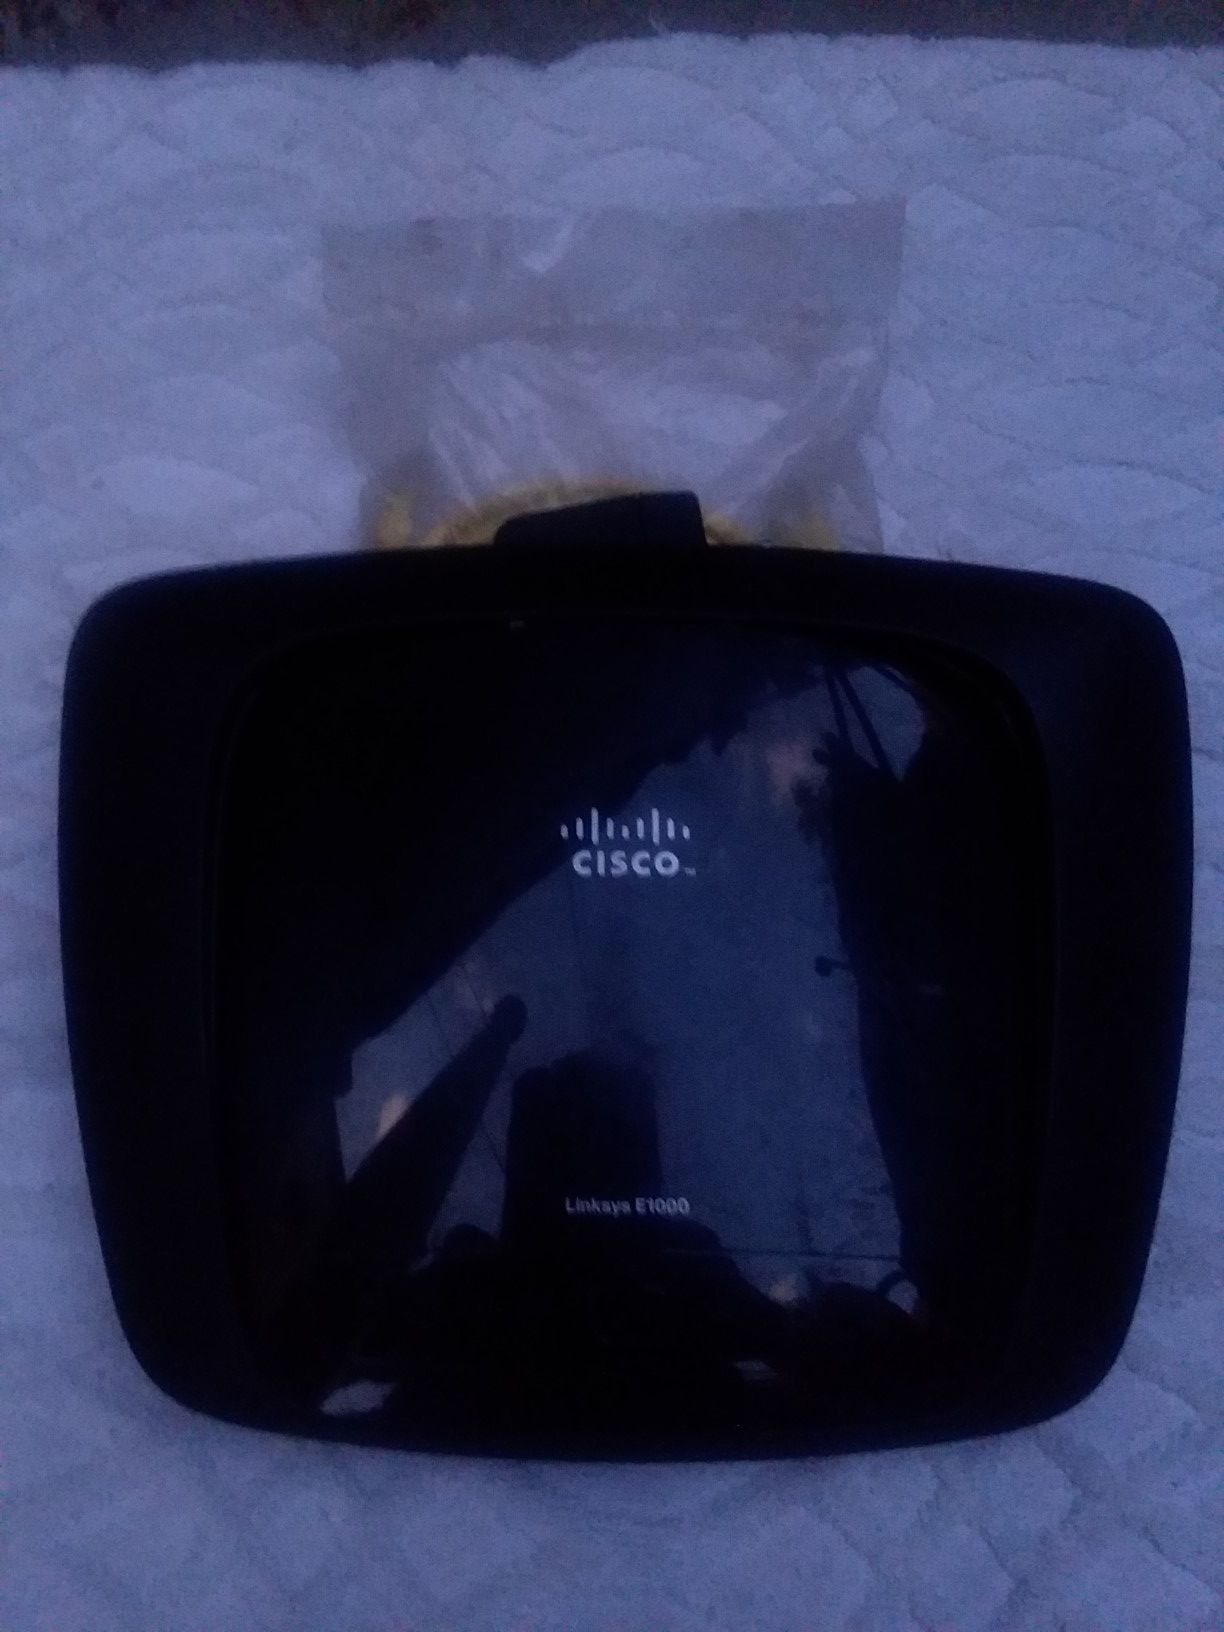 Cisco Linksys E1000 V2.1 300Mbps wireless-N router